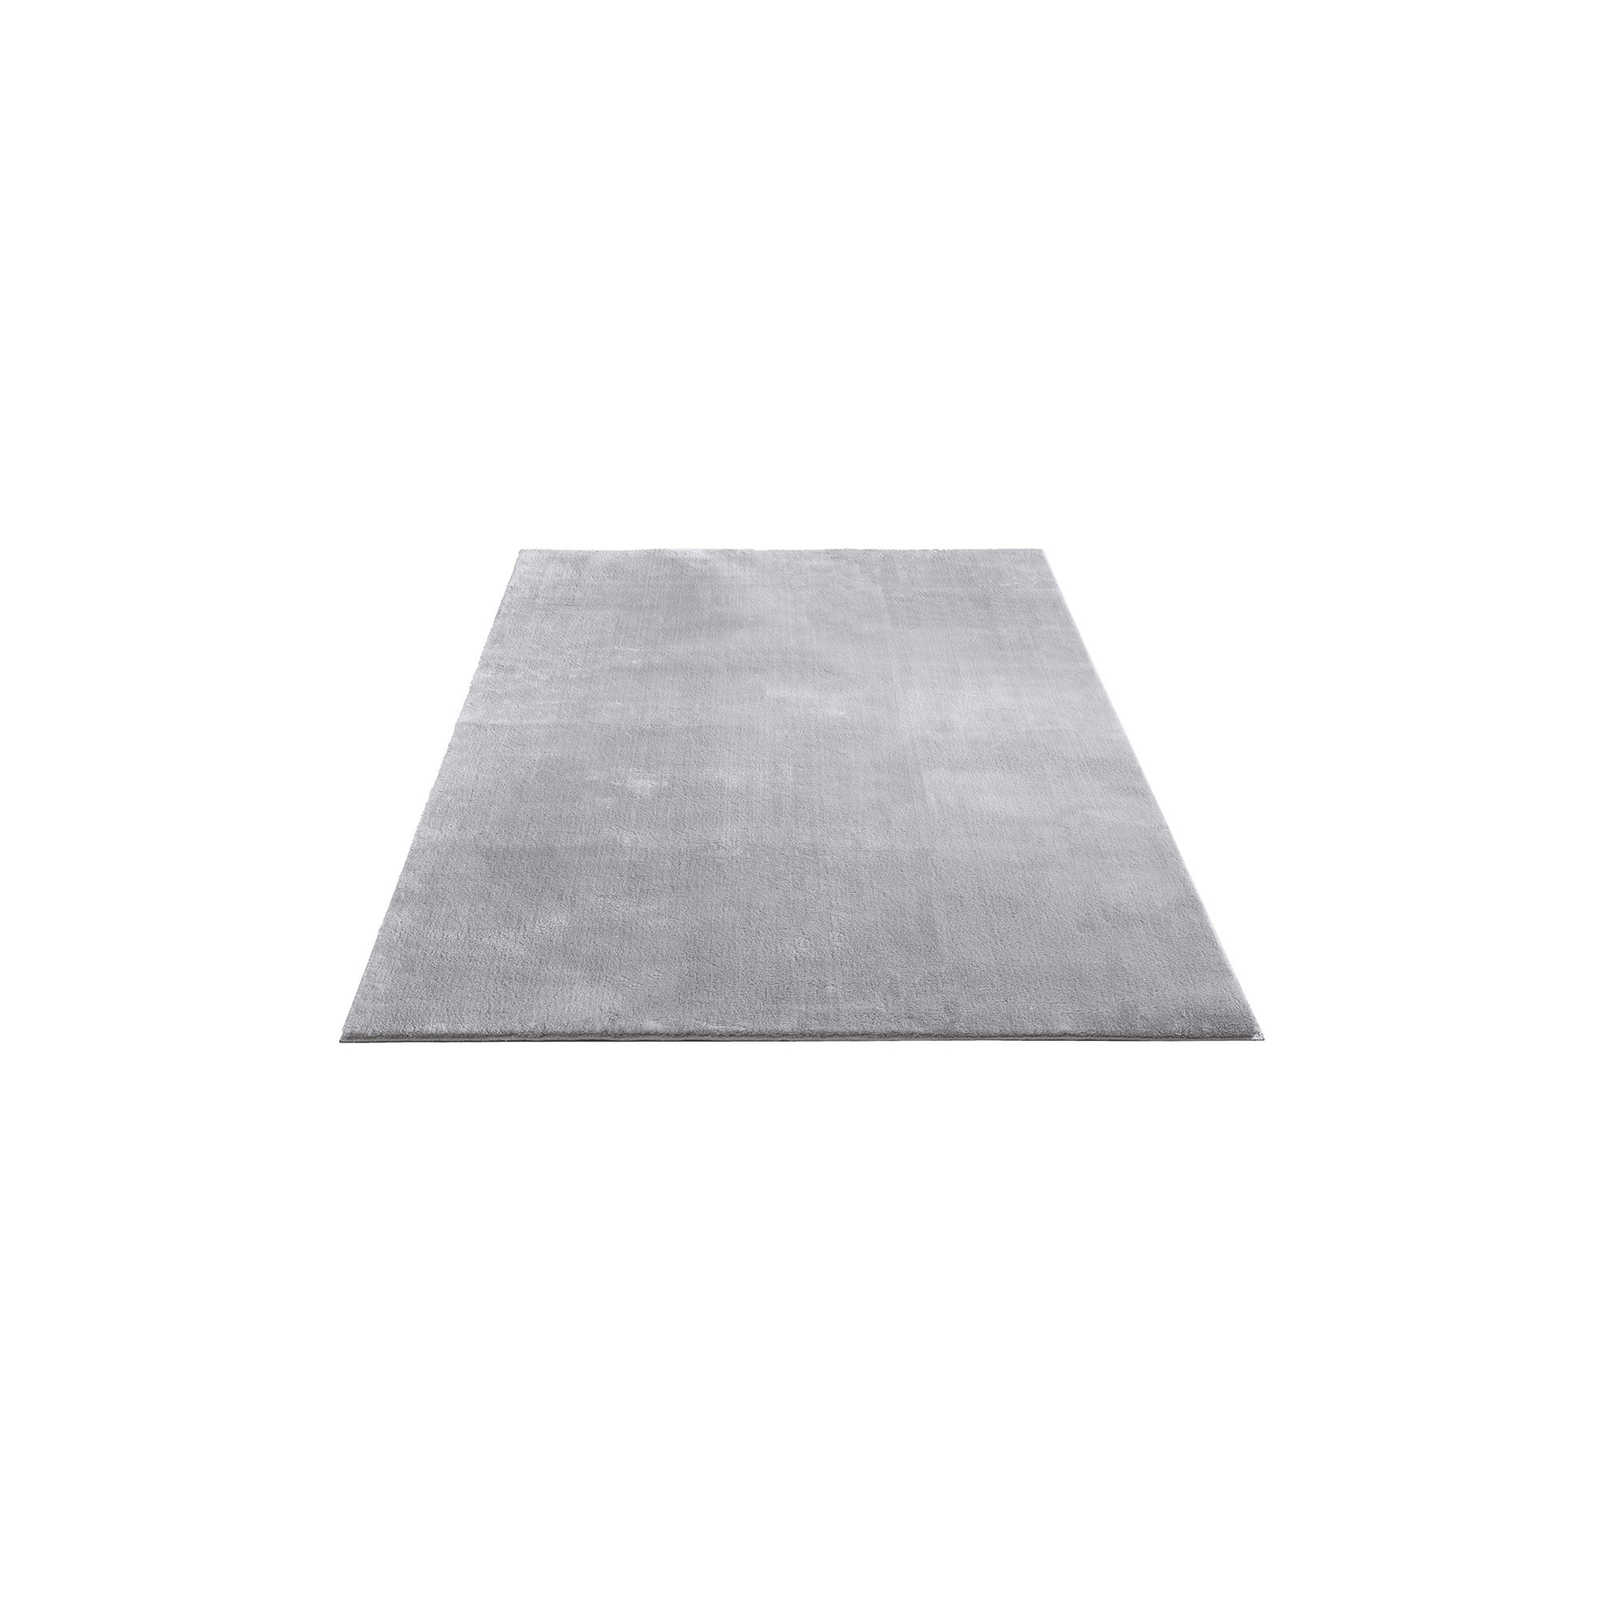 Fine high pile carpet in grey - 200 x 140 cm
